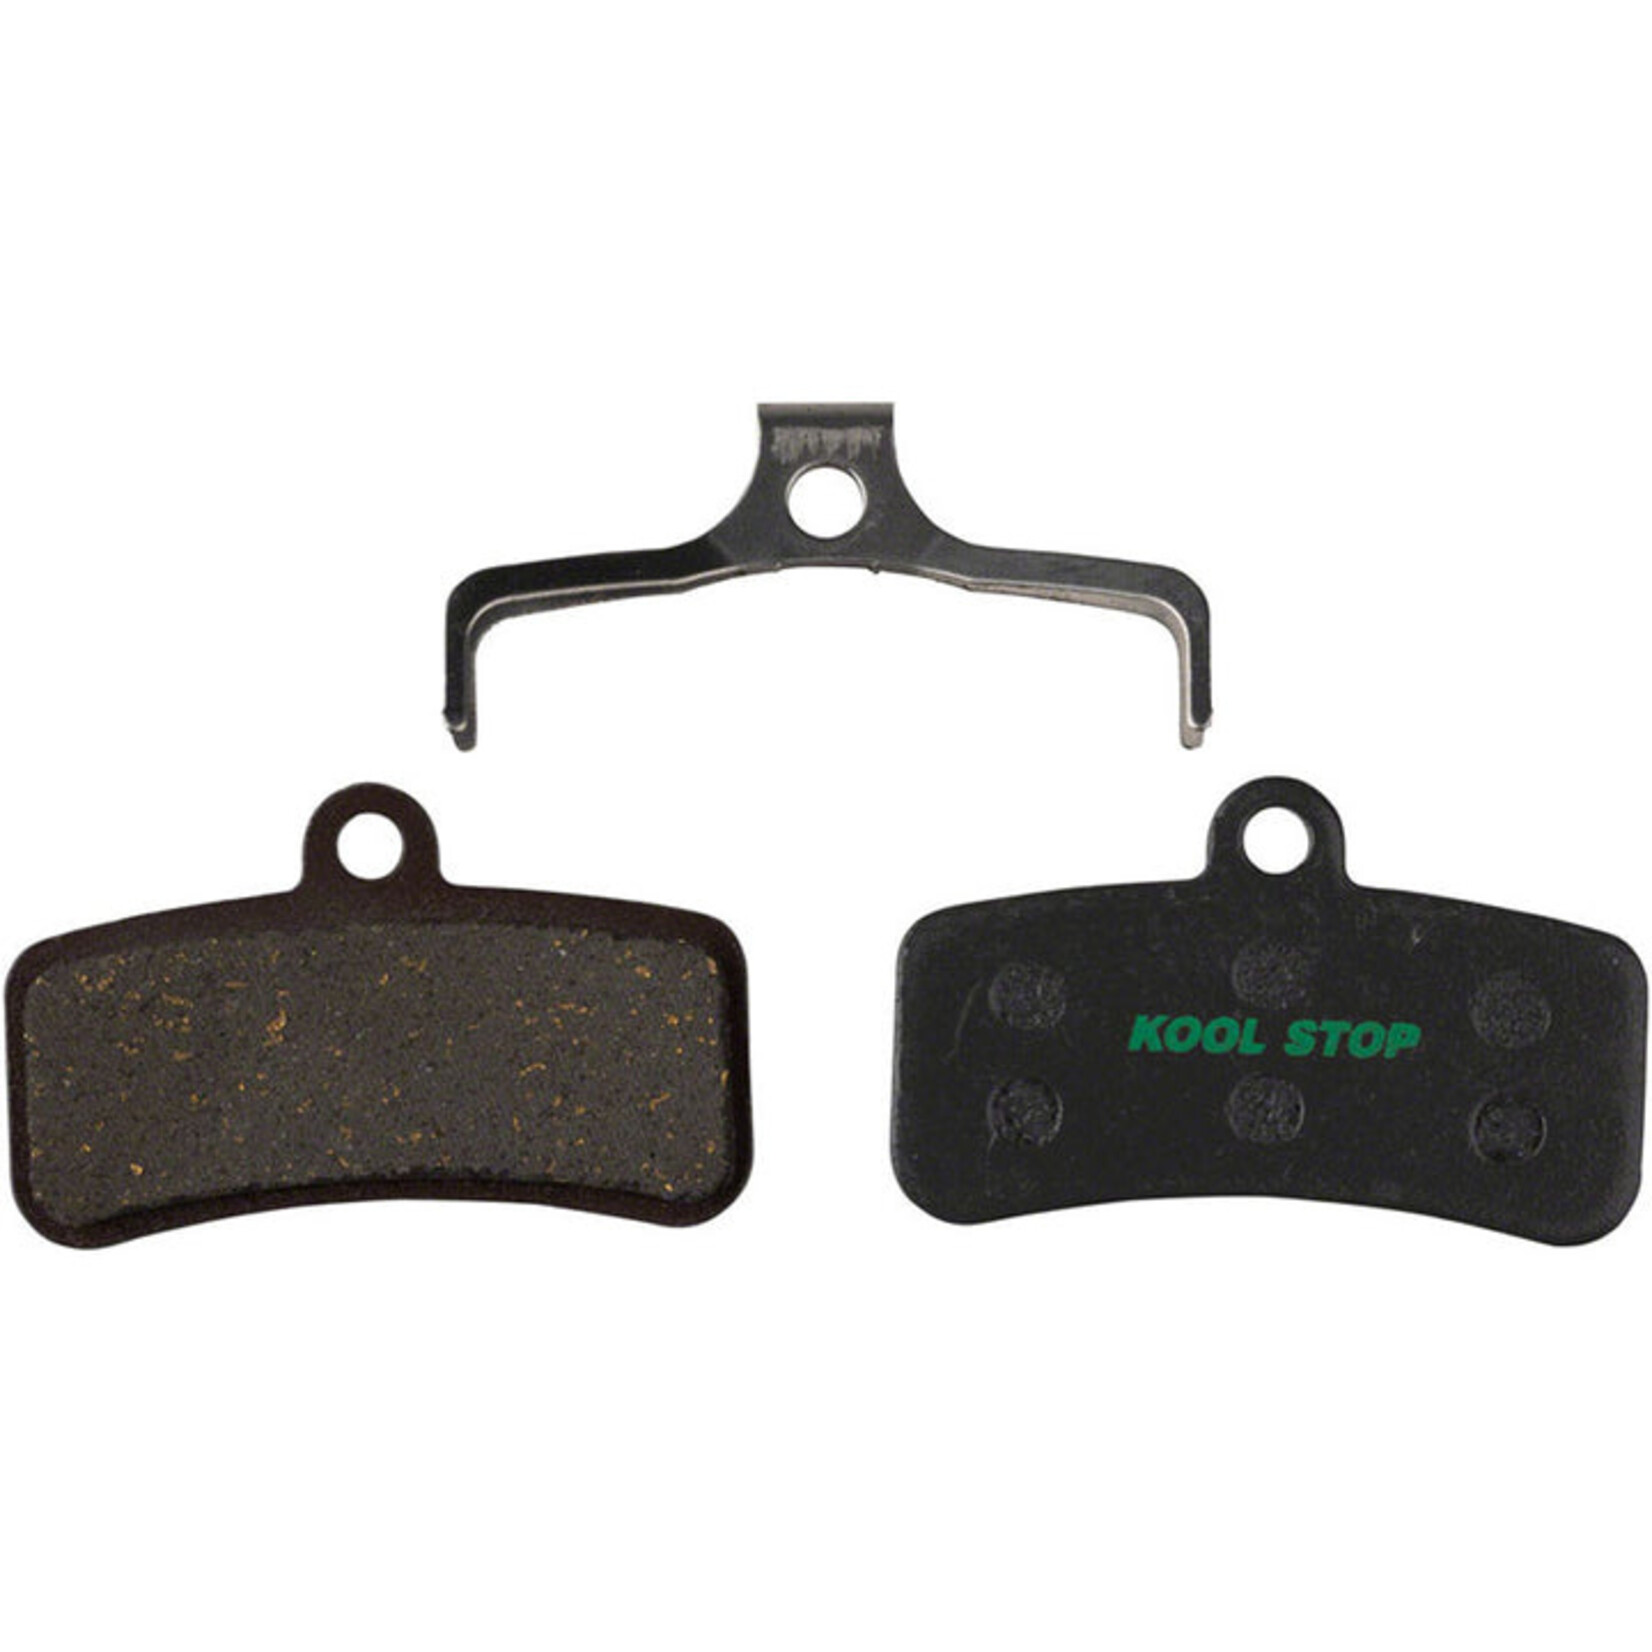 Kool-Stop Kool-Stop Shimano Saint/Zee Disc Brake Pads - Ebike Compound - Talaria Compatible